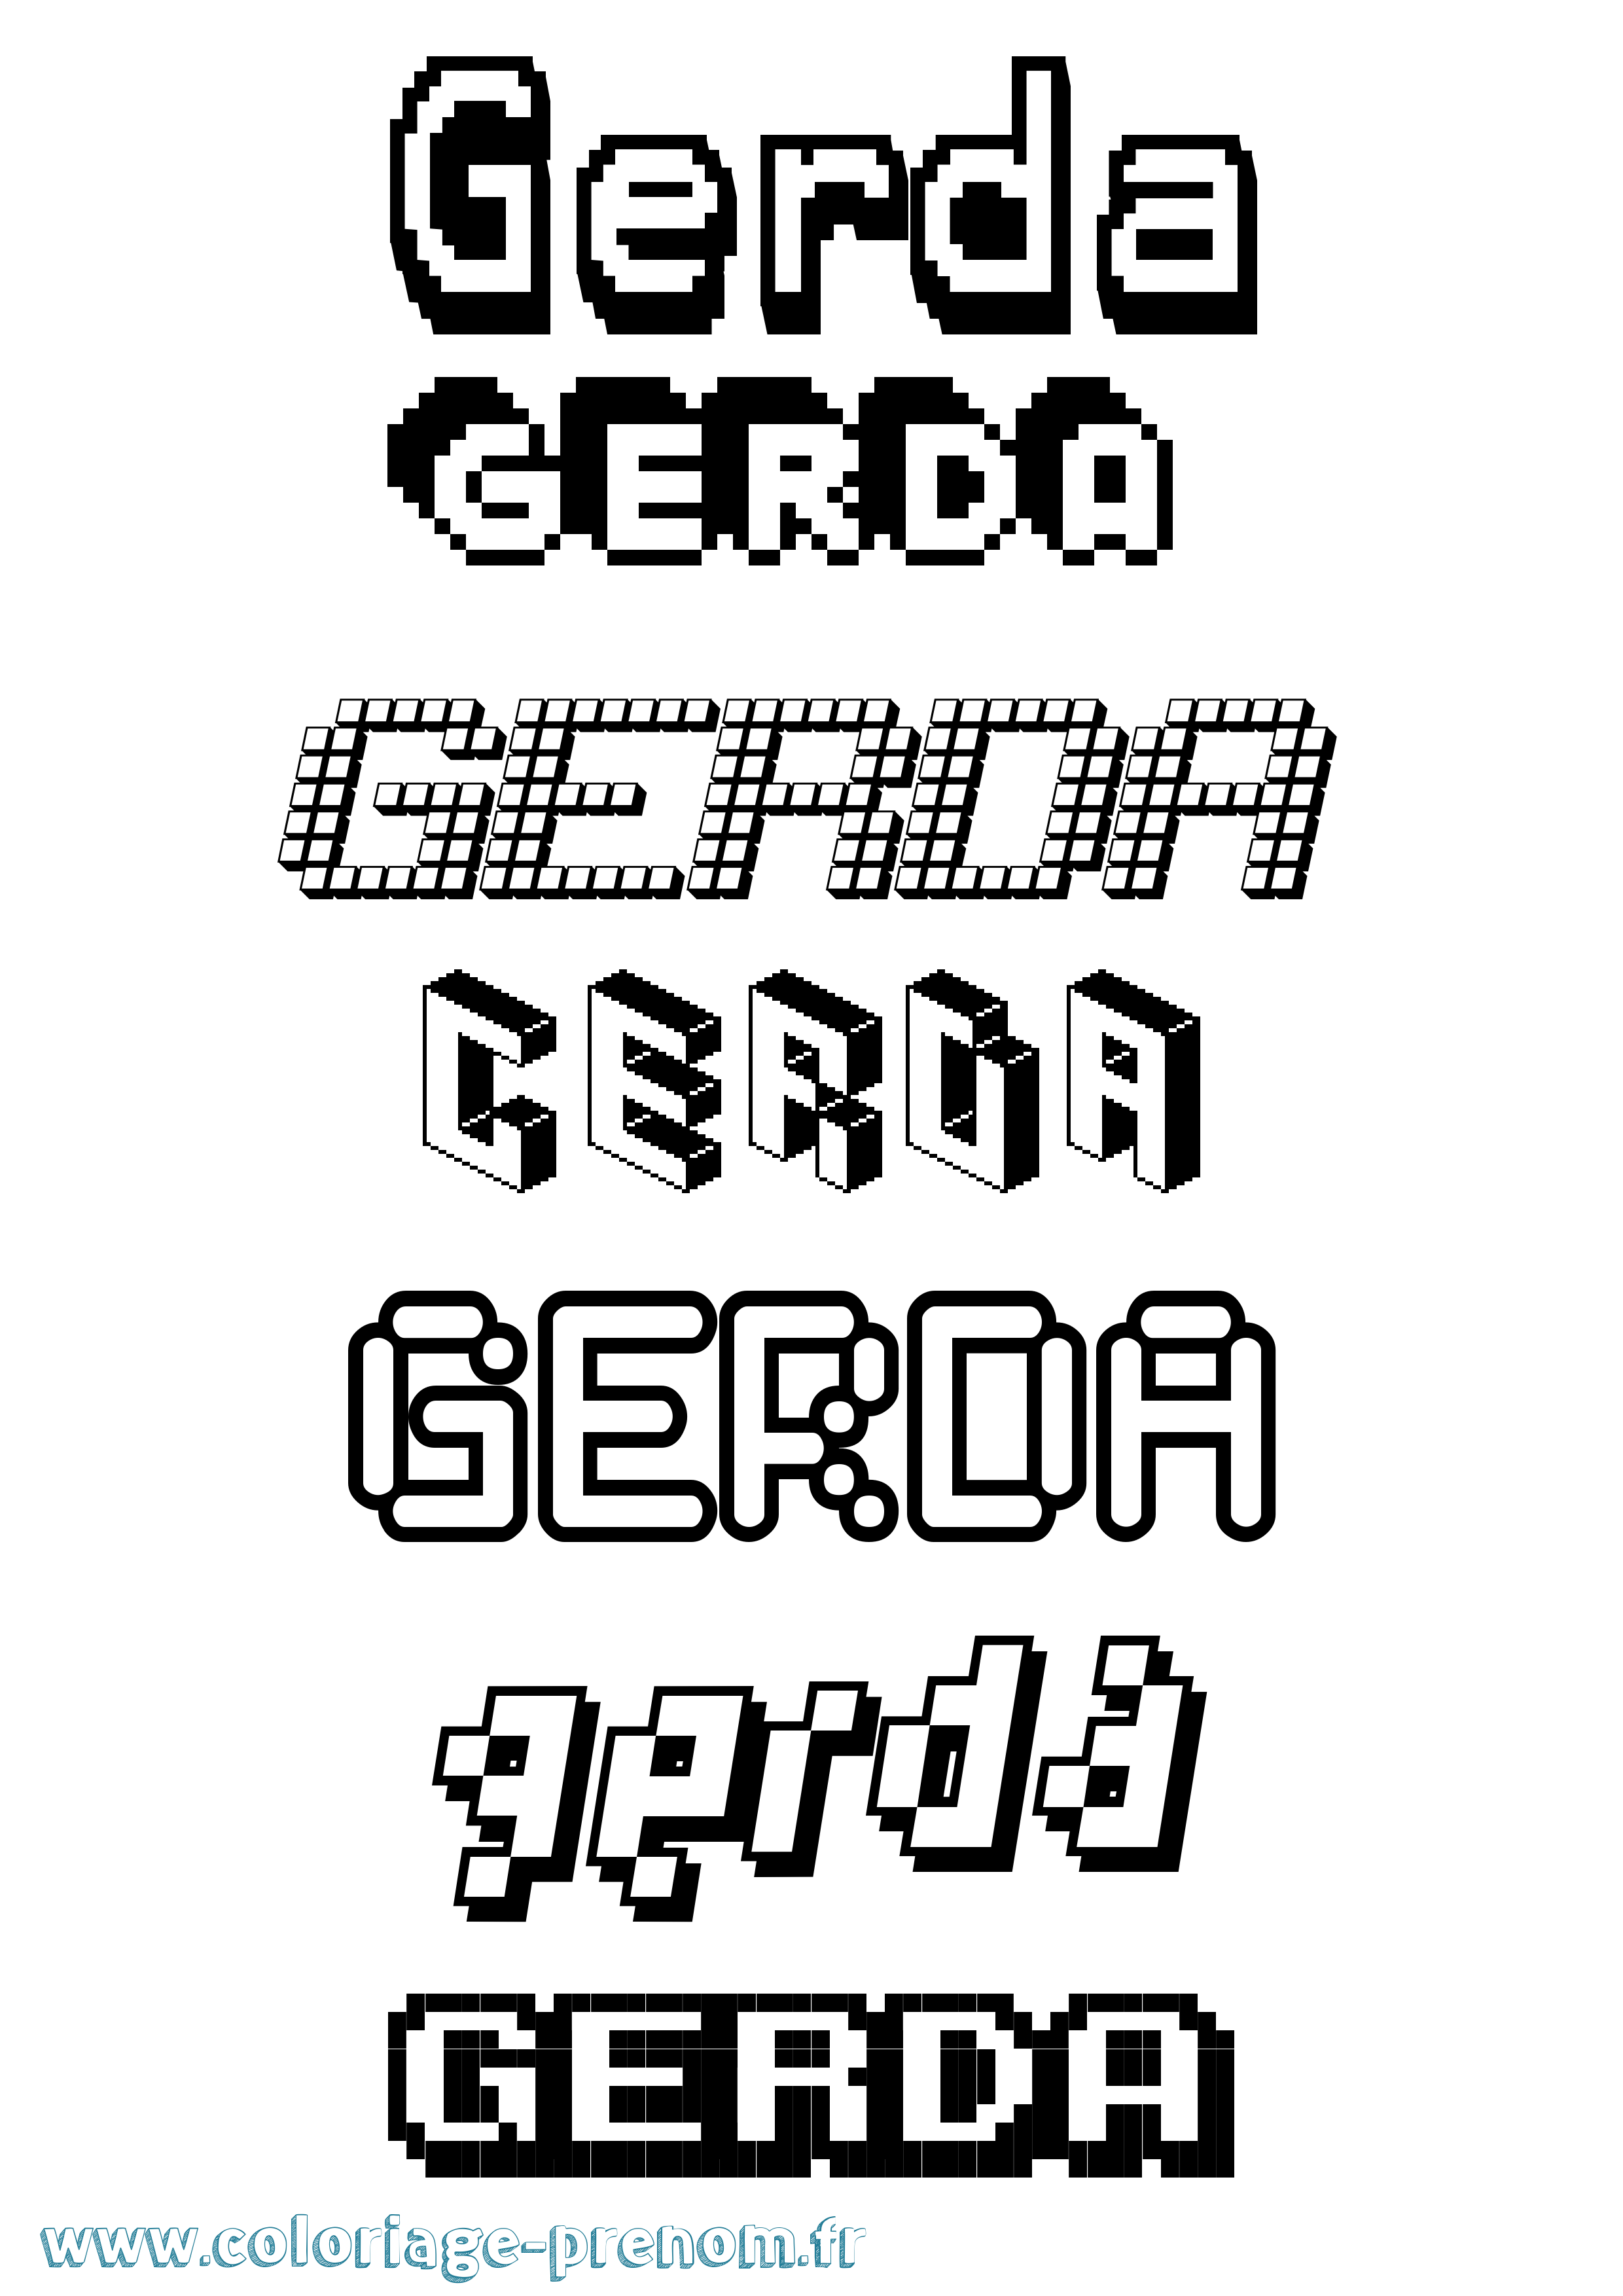 Coloriage prénom Gerda Pixel